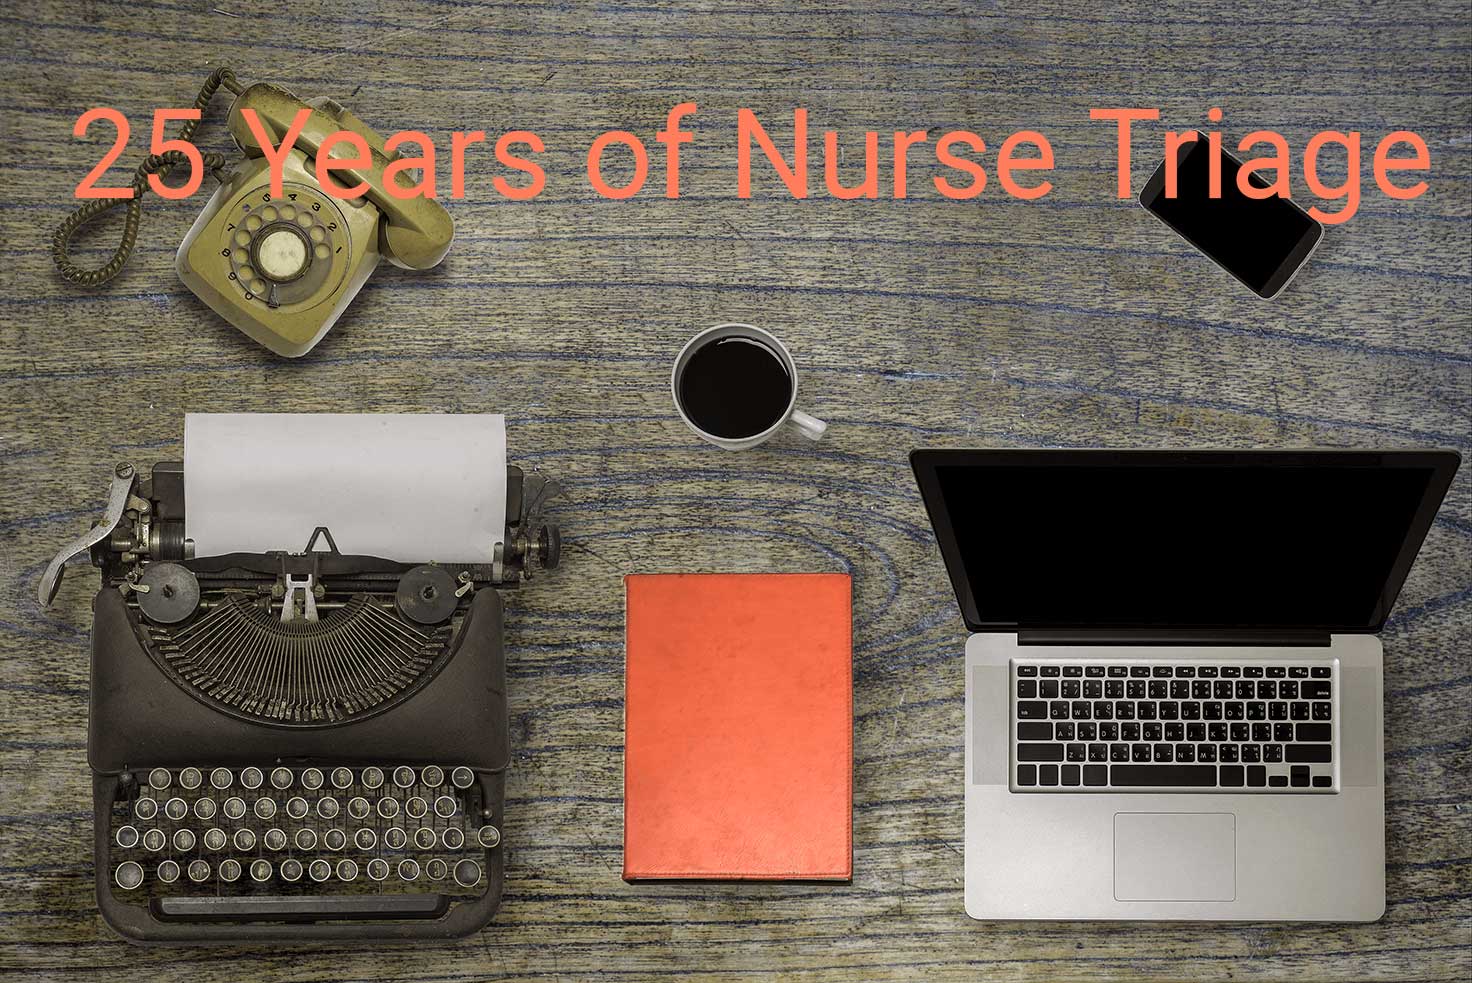 VIDEO: 25 Years of Nurse Triage